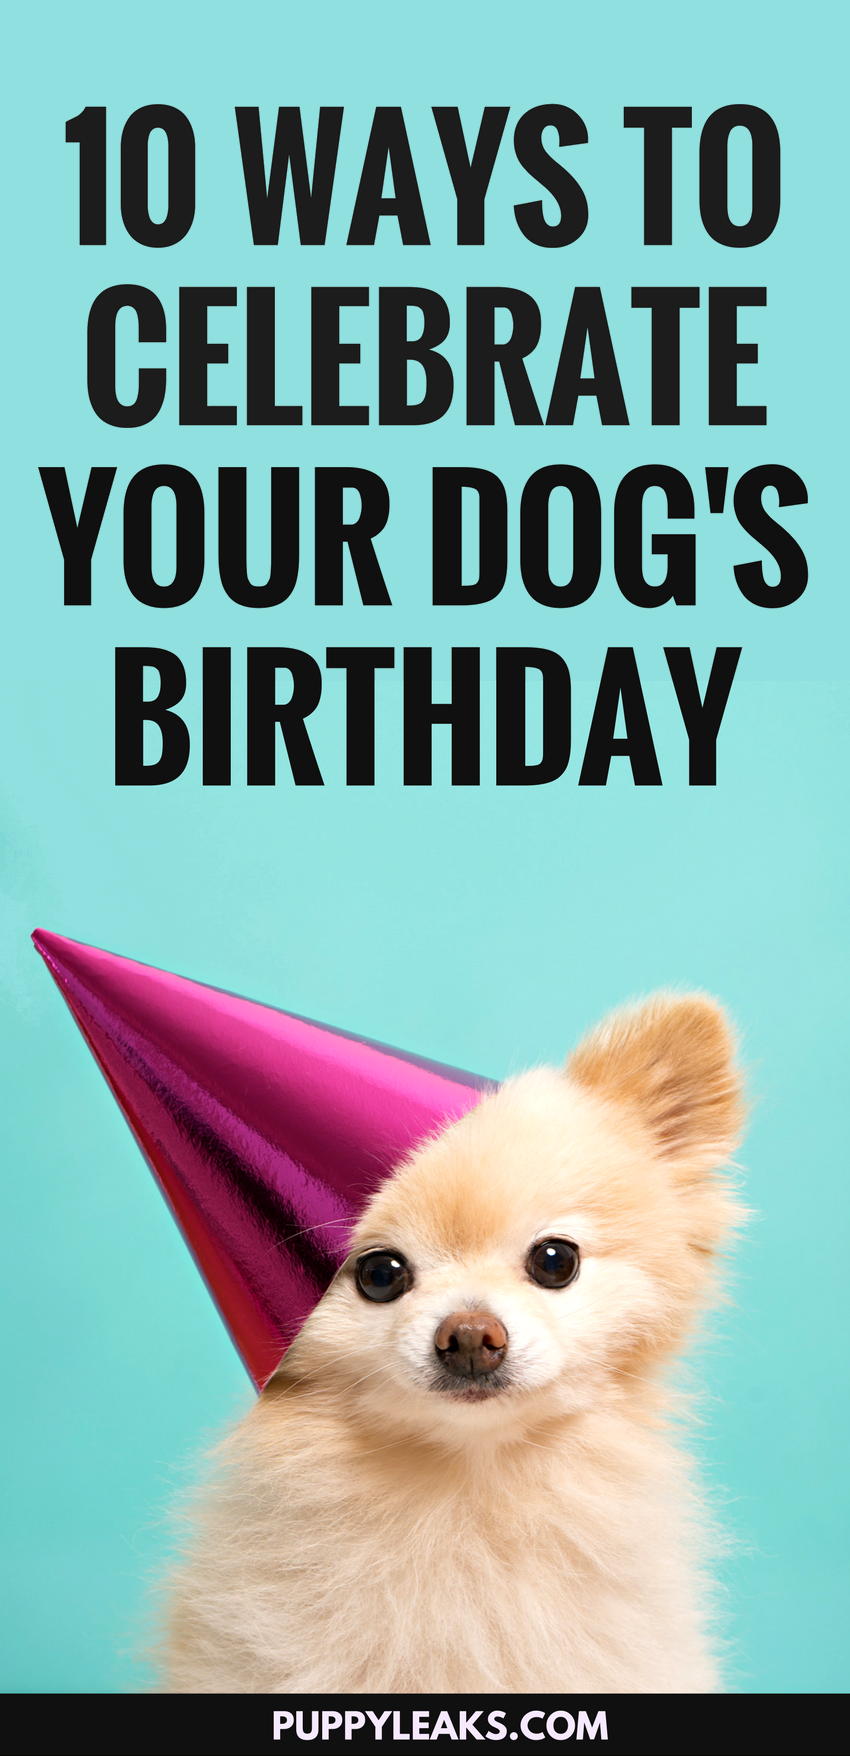 10 Fun Ways to Celebrate Your Dog